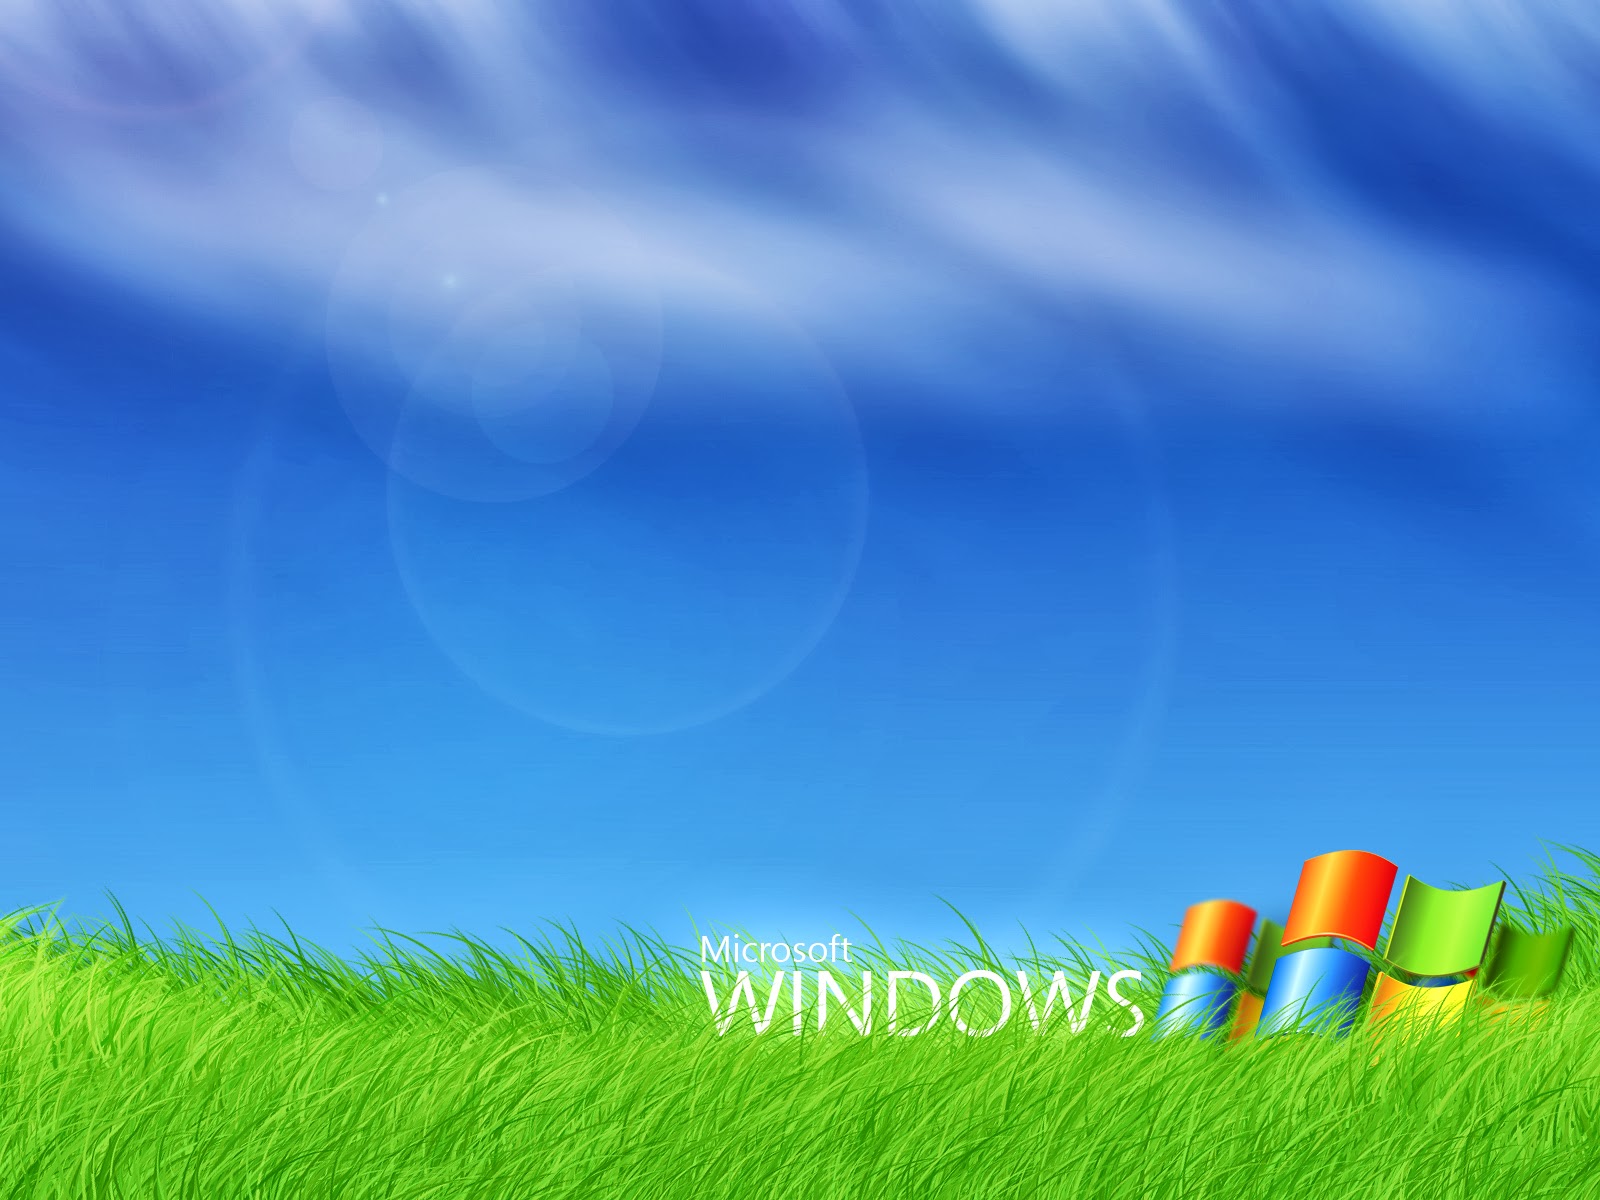 microsoft windows wallpaper free wallpaper screensaver 8 754198jpg